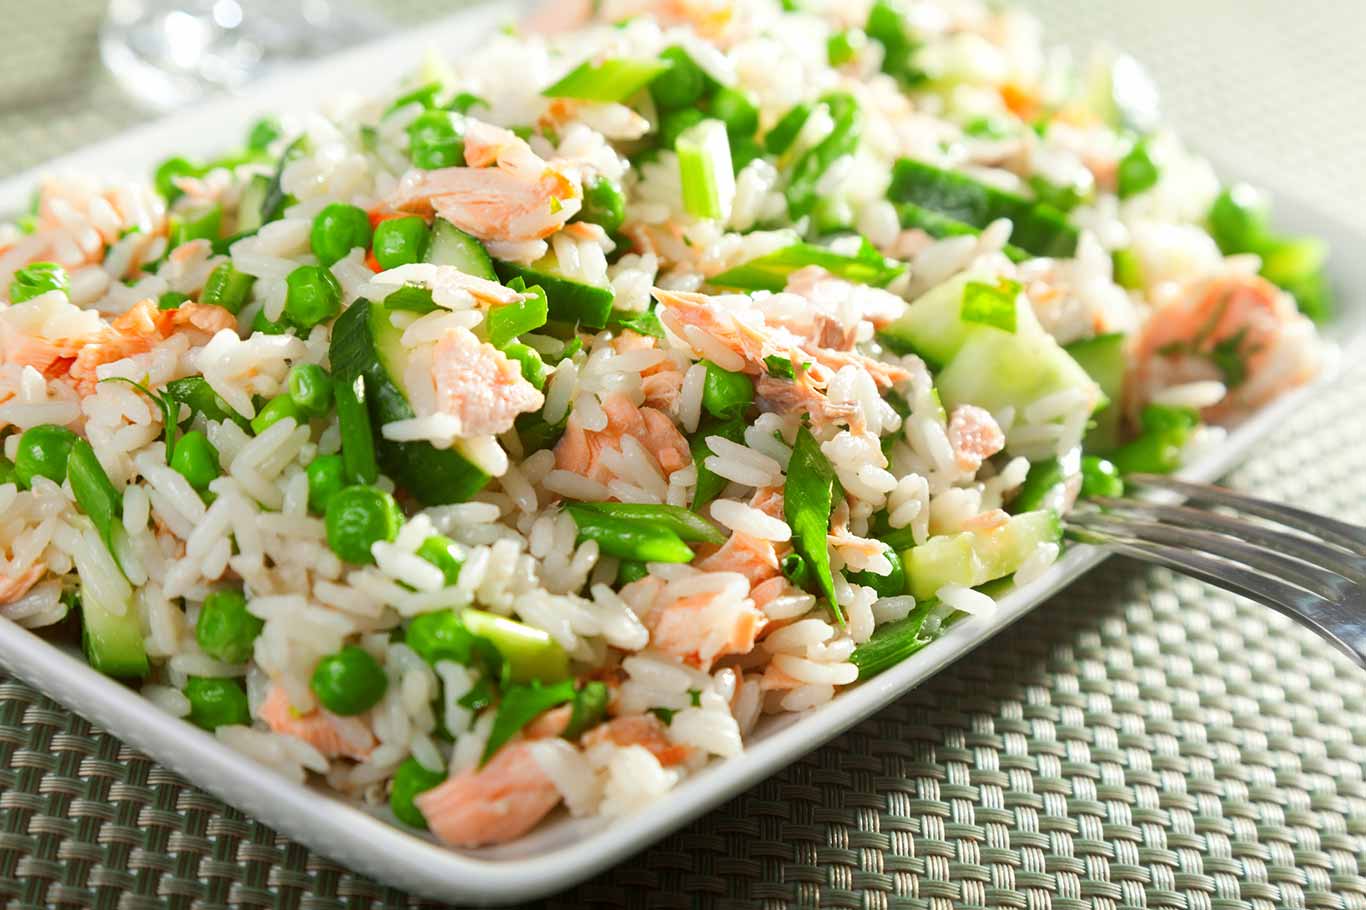 Receta fácil de ensalada de arroz con salmón